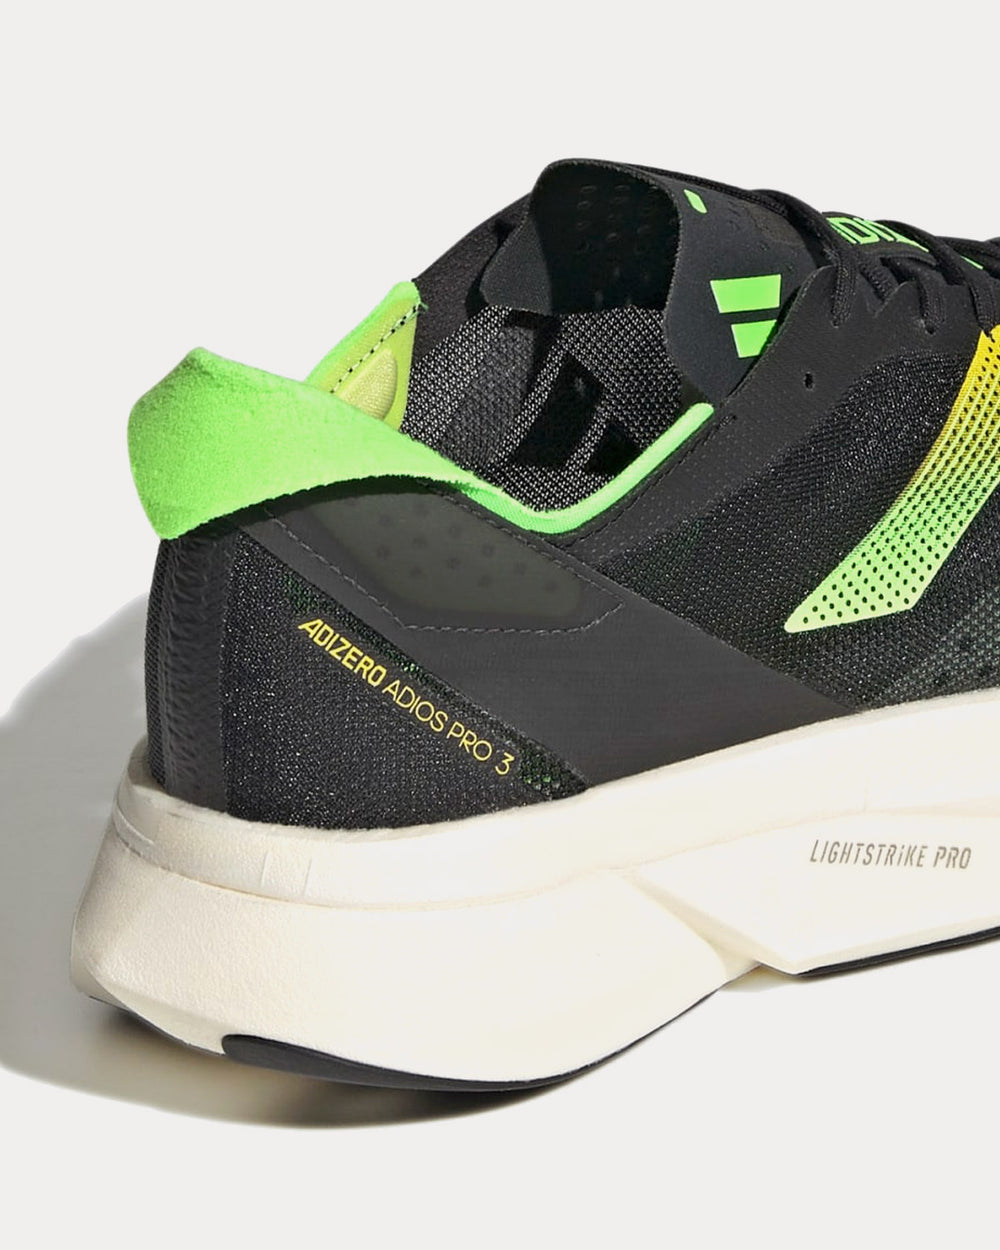 Adidas Adizero Adios Pro 3 Core Black / Beam Yellow / Solar Green ...